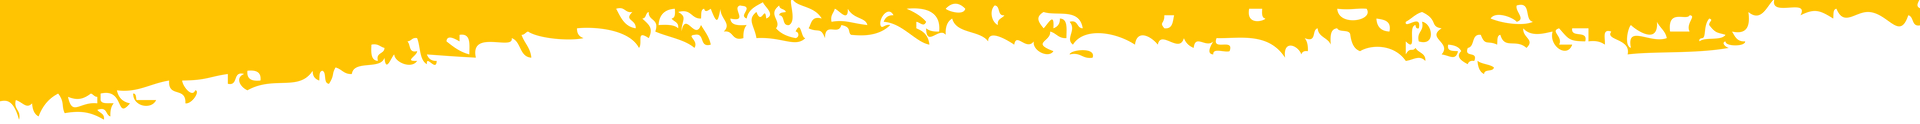 Yellow Header Grunge Graphic